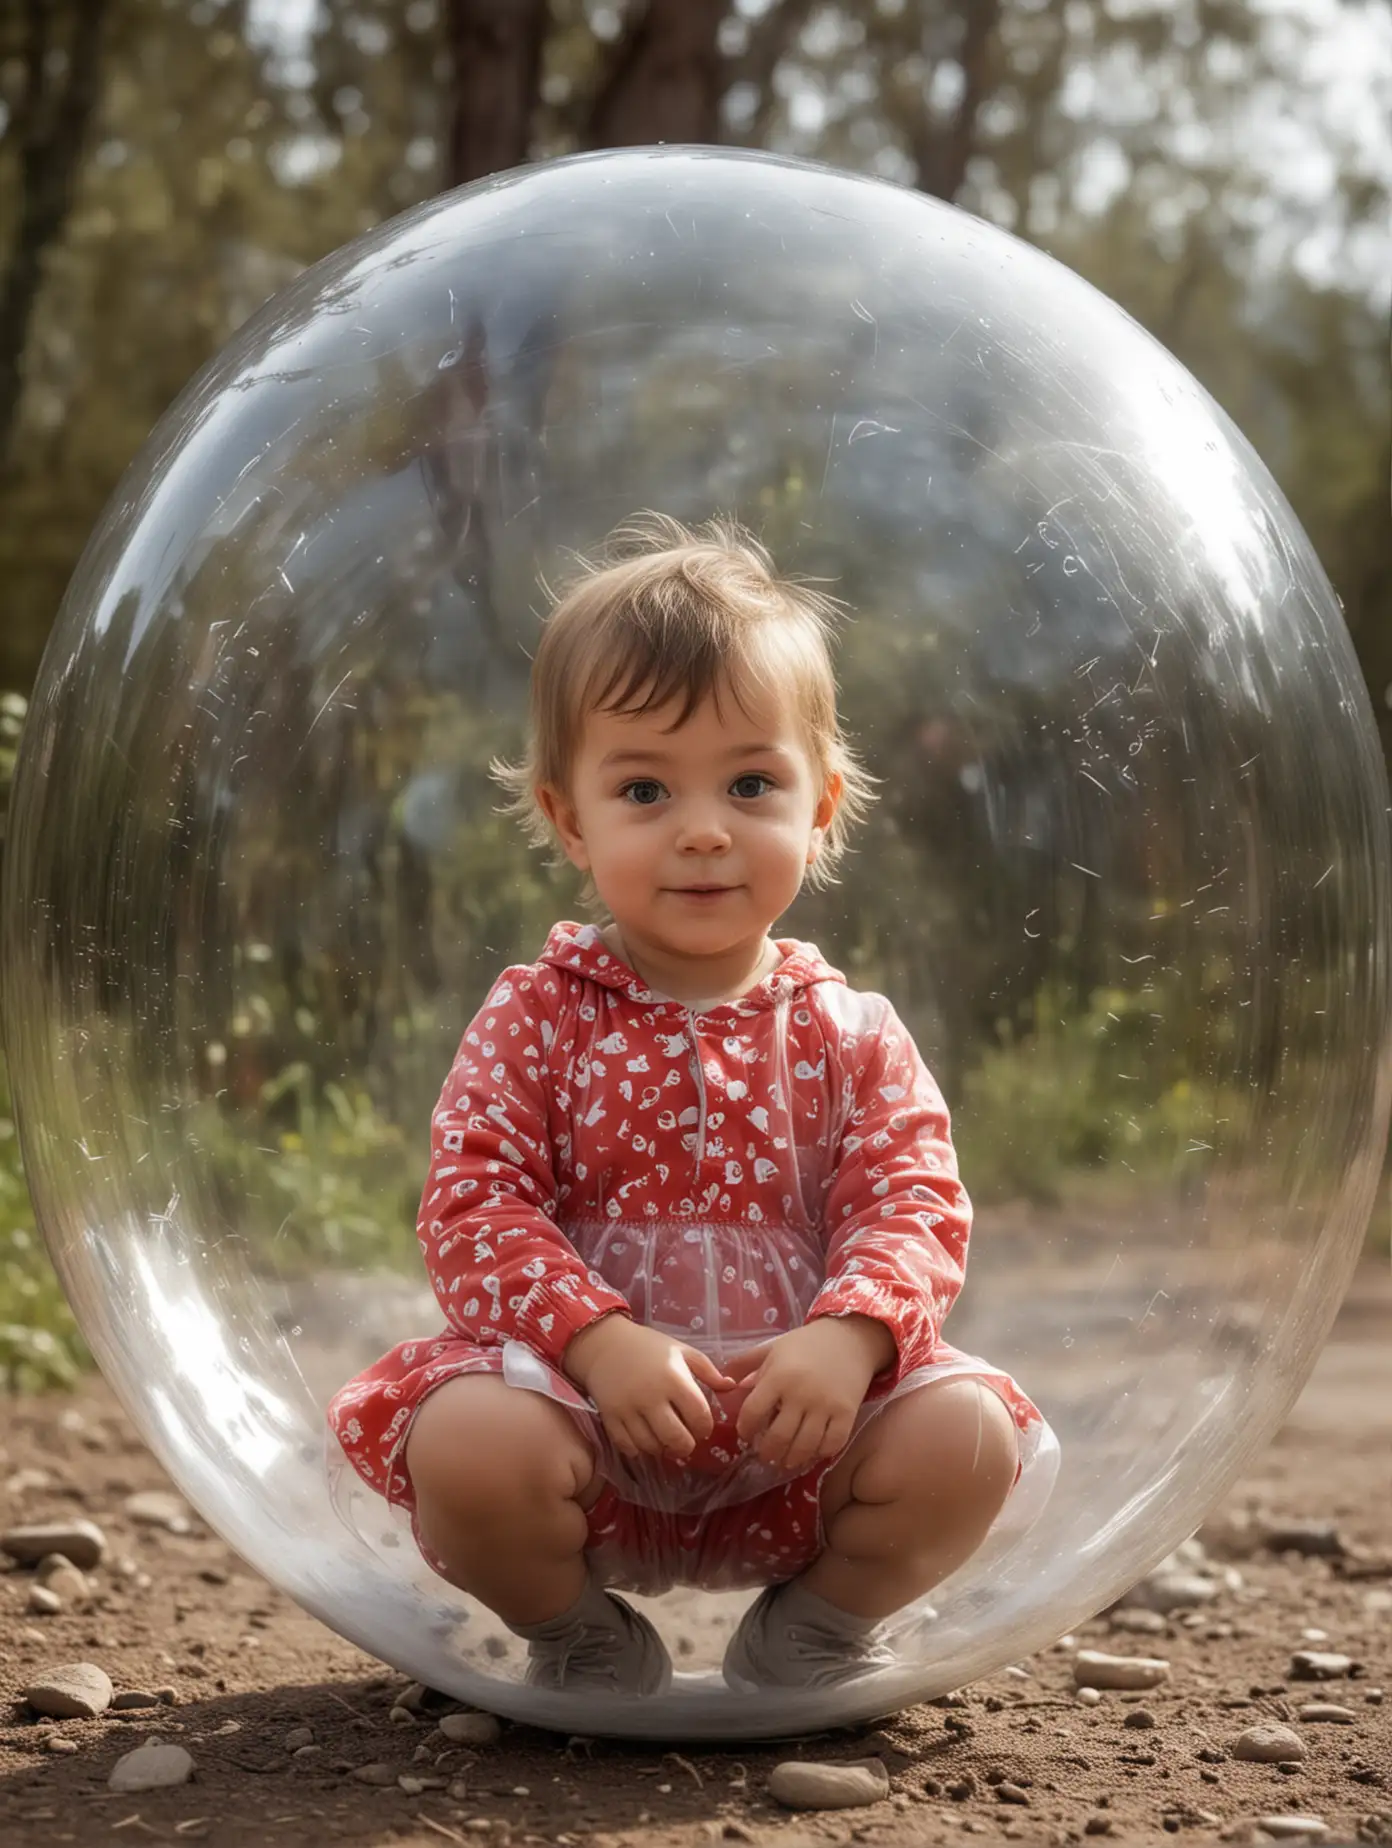 a cute child inside a transparent bubble, the child's origin is half Chilean and half Danish/German